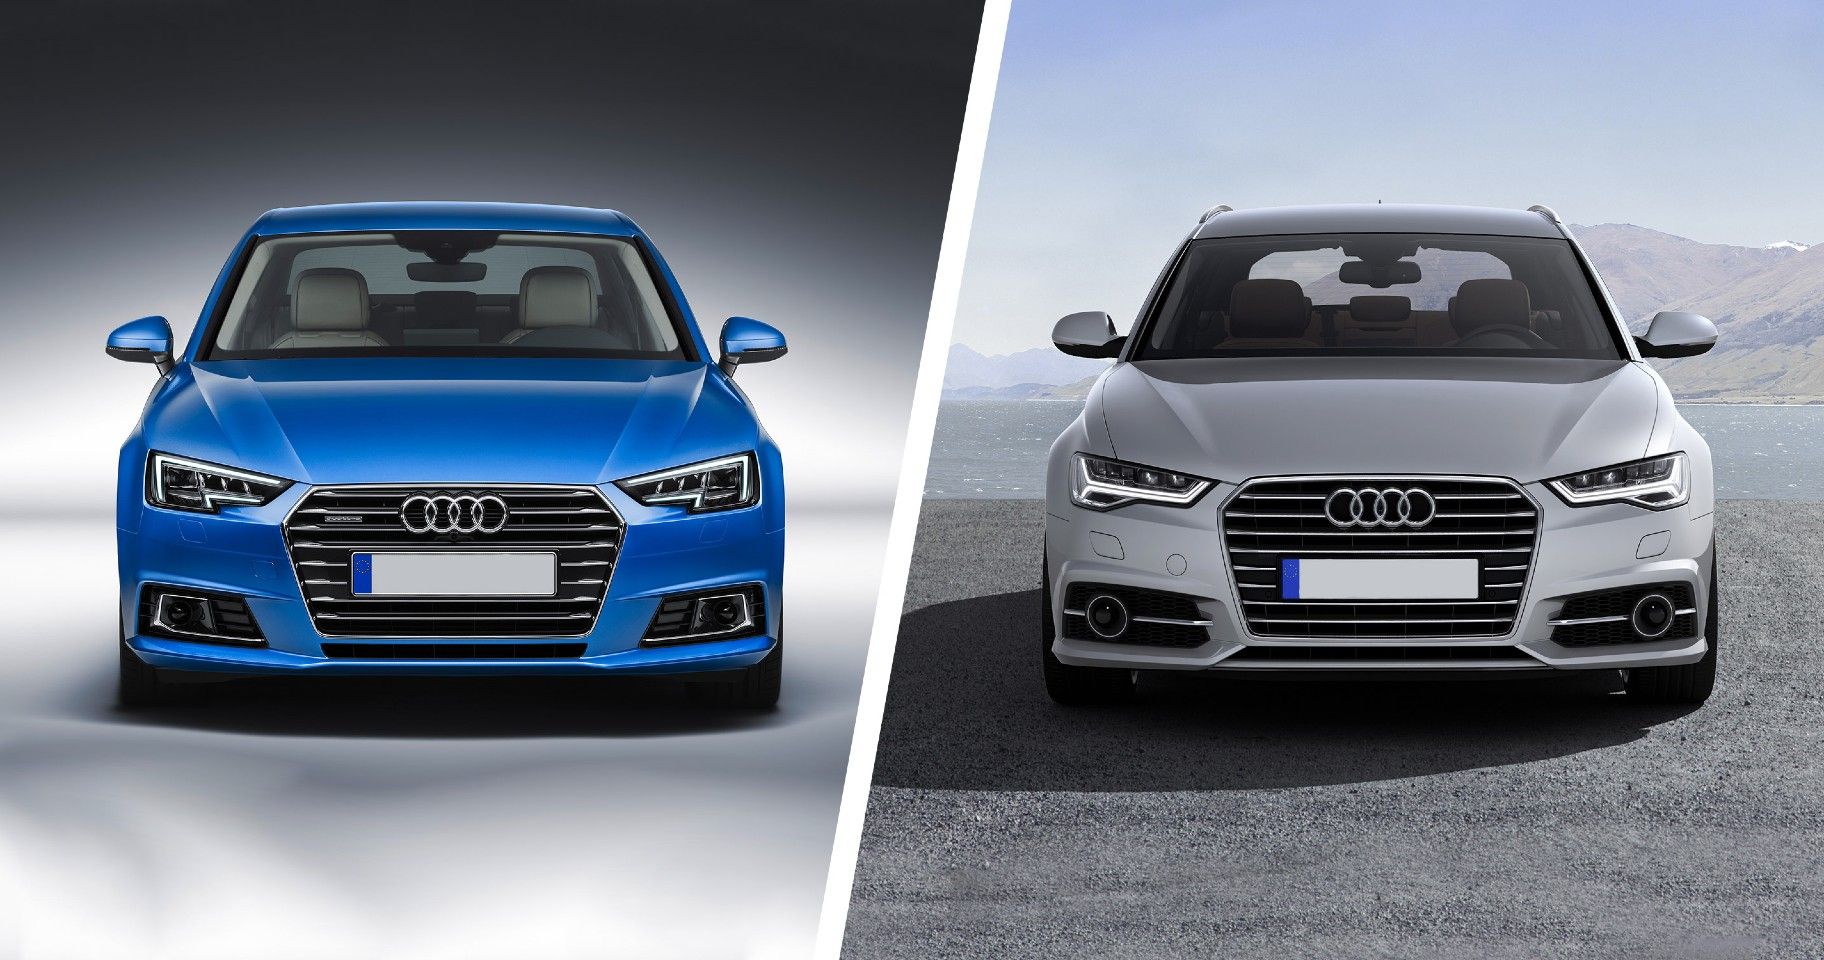 Audi A4 vs A6 side-by-side comparison